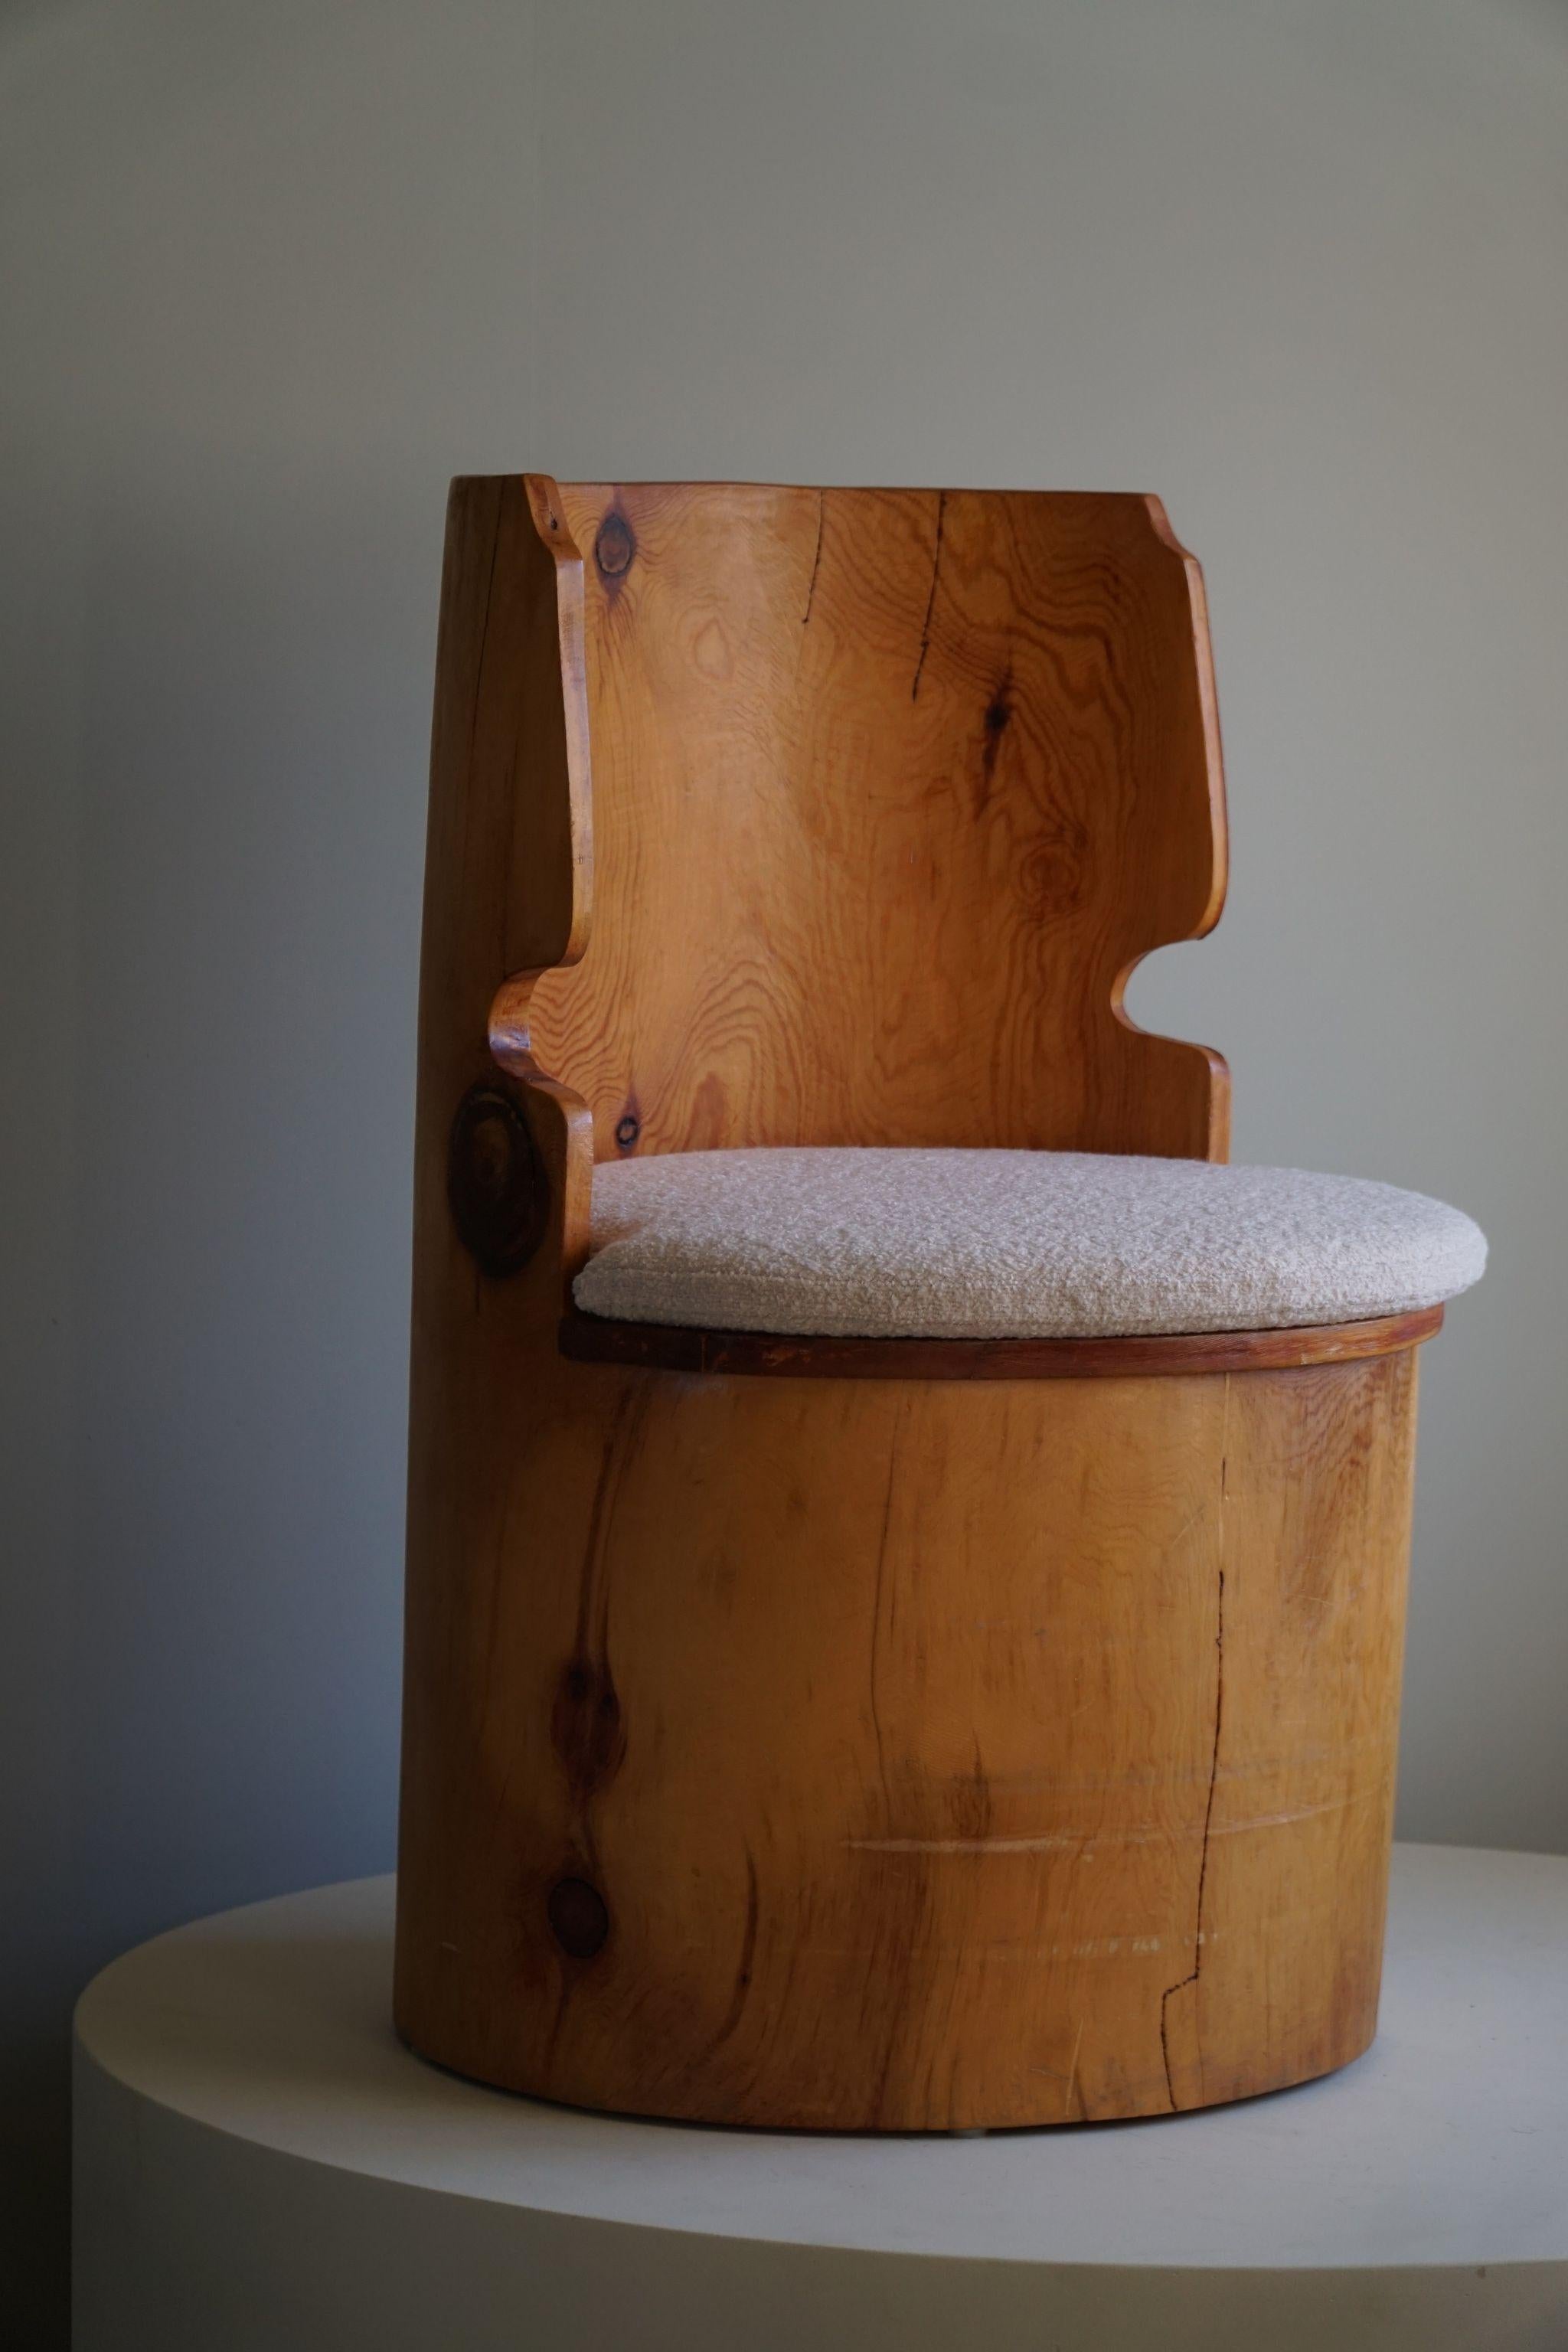 Sculptural Carved Wabi Sabi Brutalist Stump Chair in Solid Pine, Swedish, 1970s For Sale 7